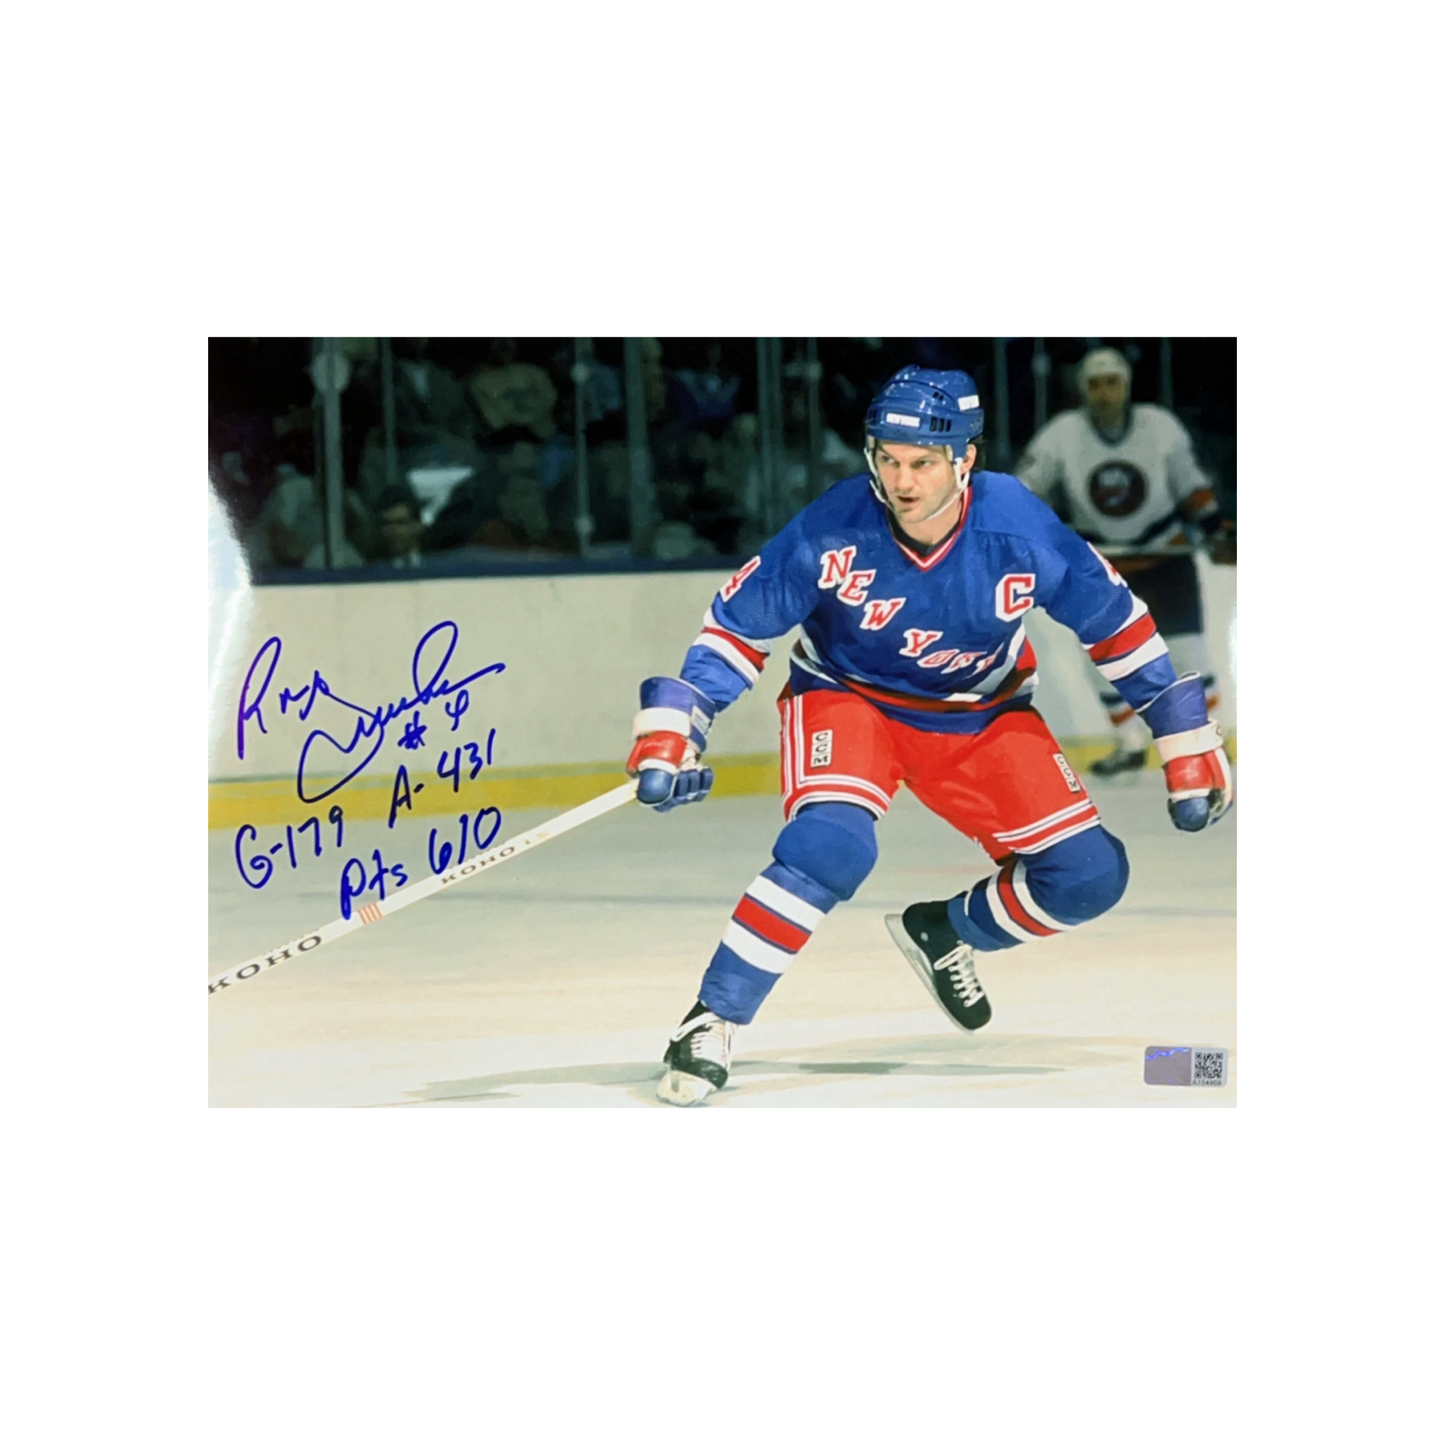 Ron Greschner Autographed New York Rangers Blue Jersey 8x10 “G-179, A-431, Pts-610” Inscriptions Steiner CX